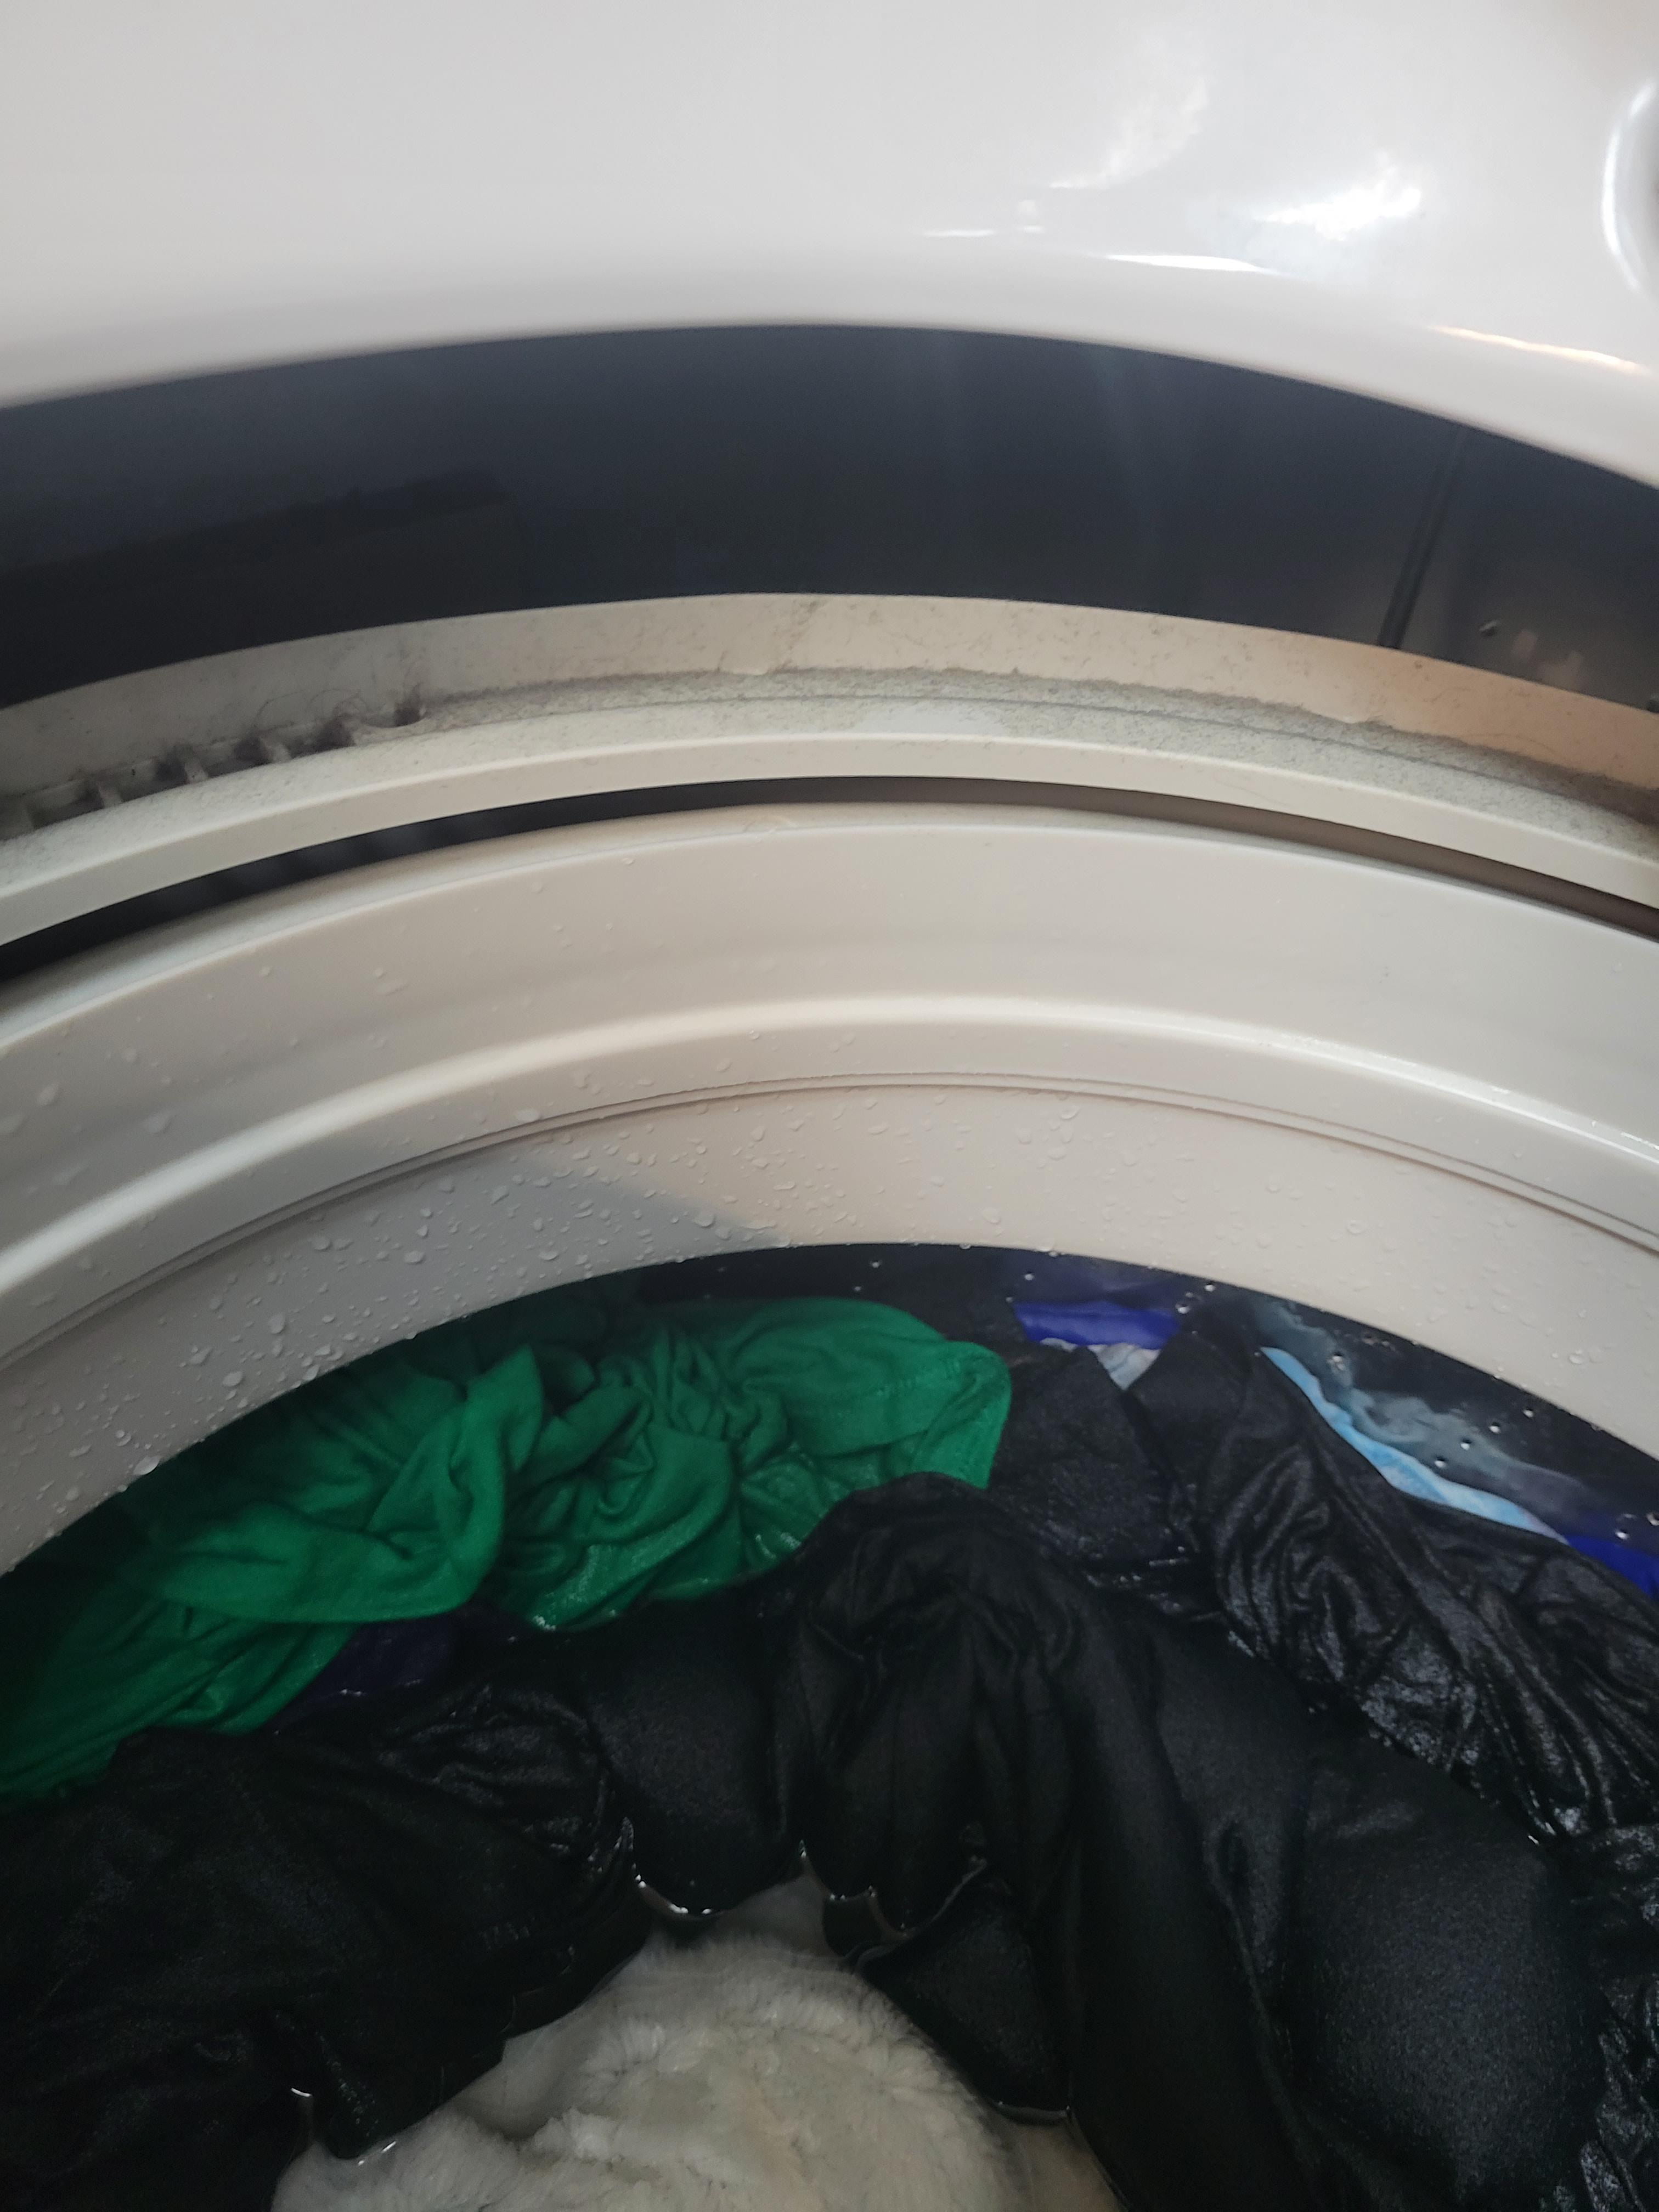 wa45m7050aw - a4 washing machine drum dropped